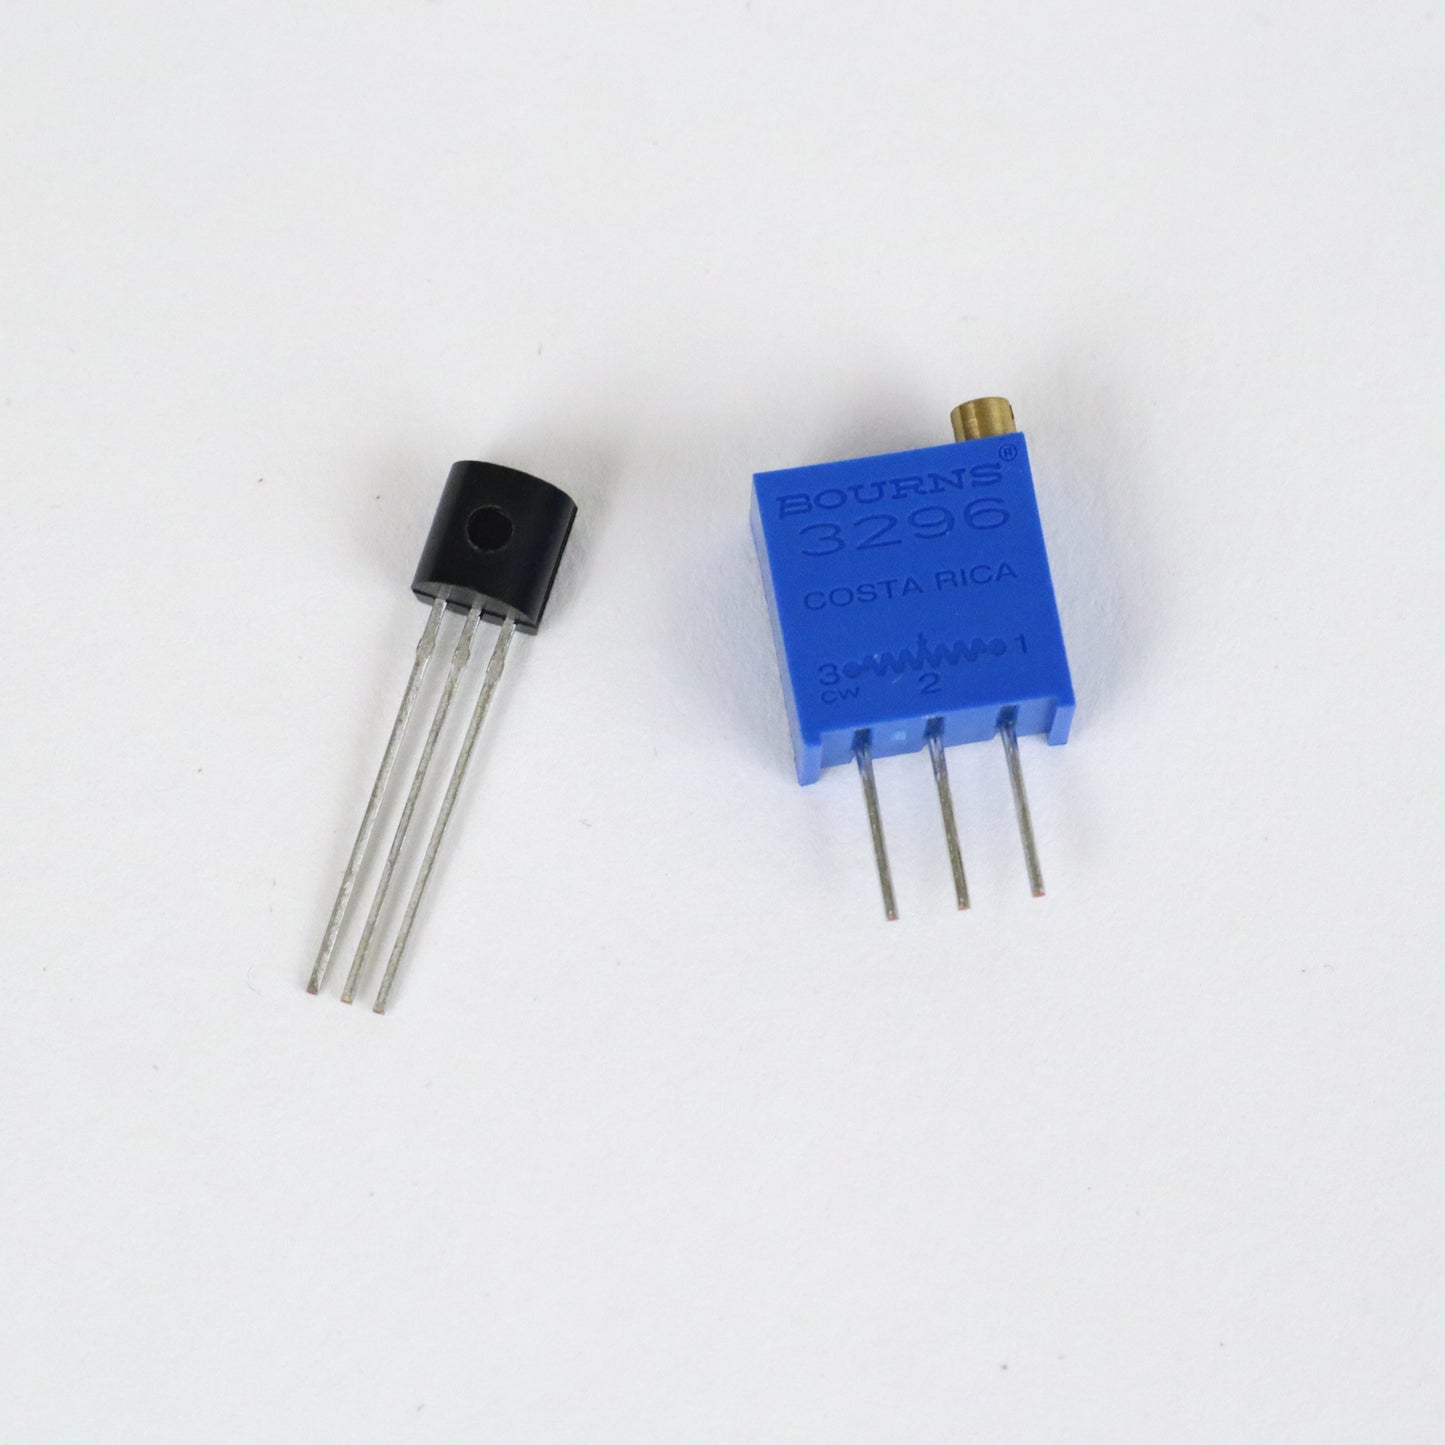 Sensor Transistor and Biasing Trimmer (Beogram 4002/4 and 4000)